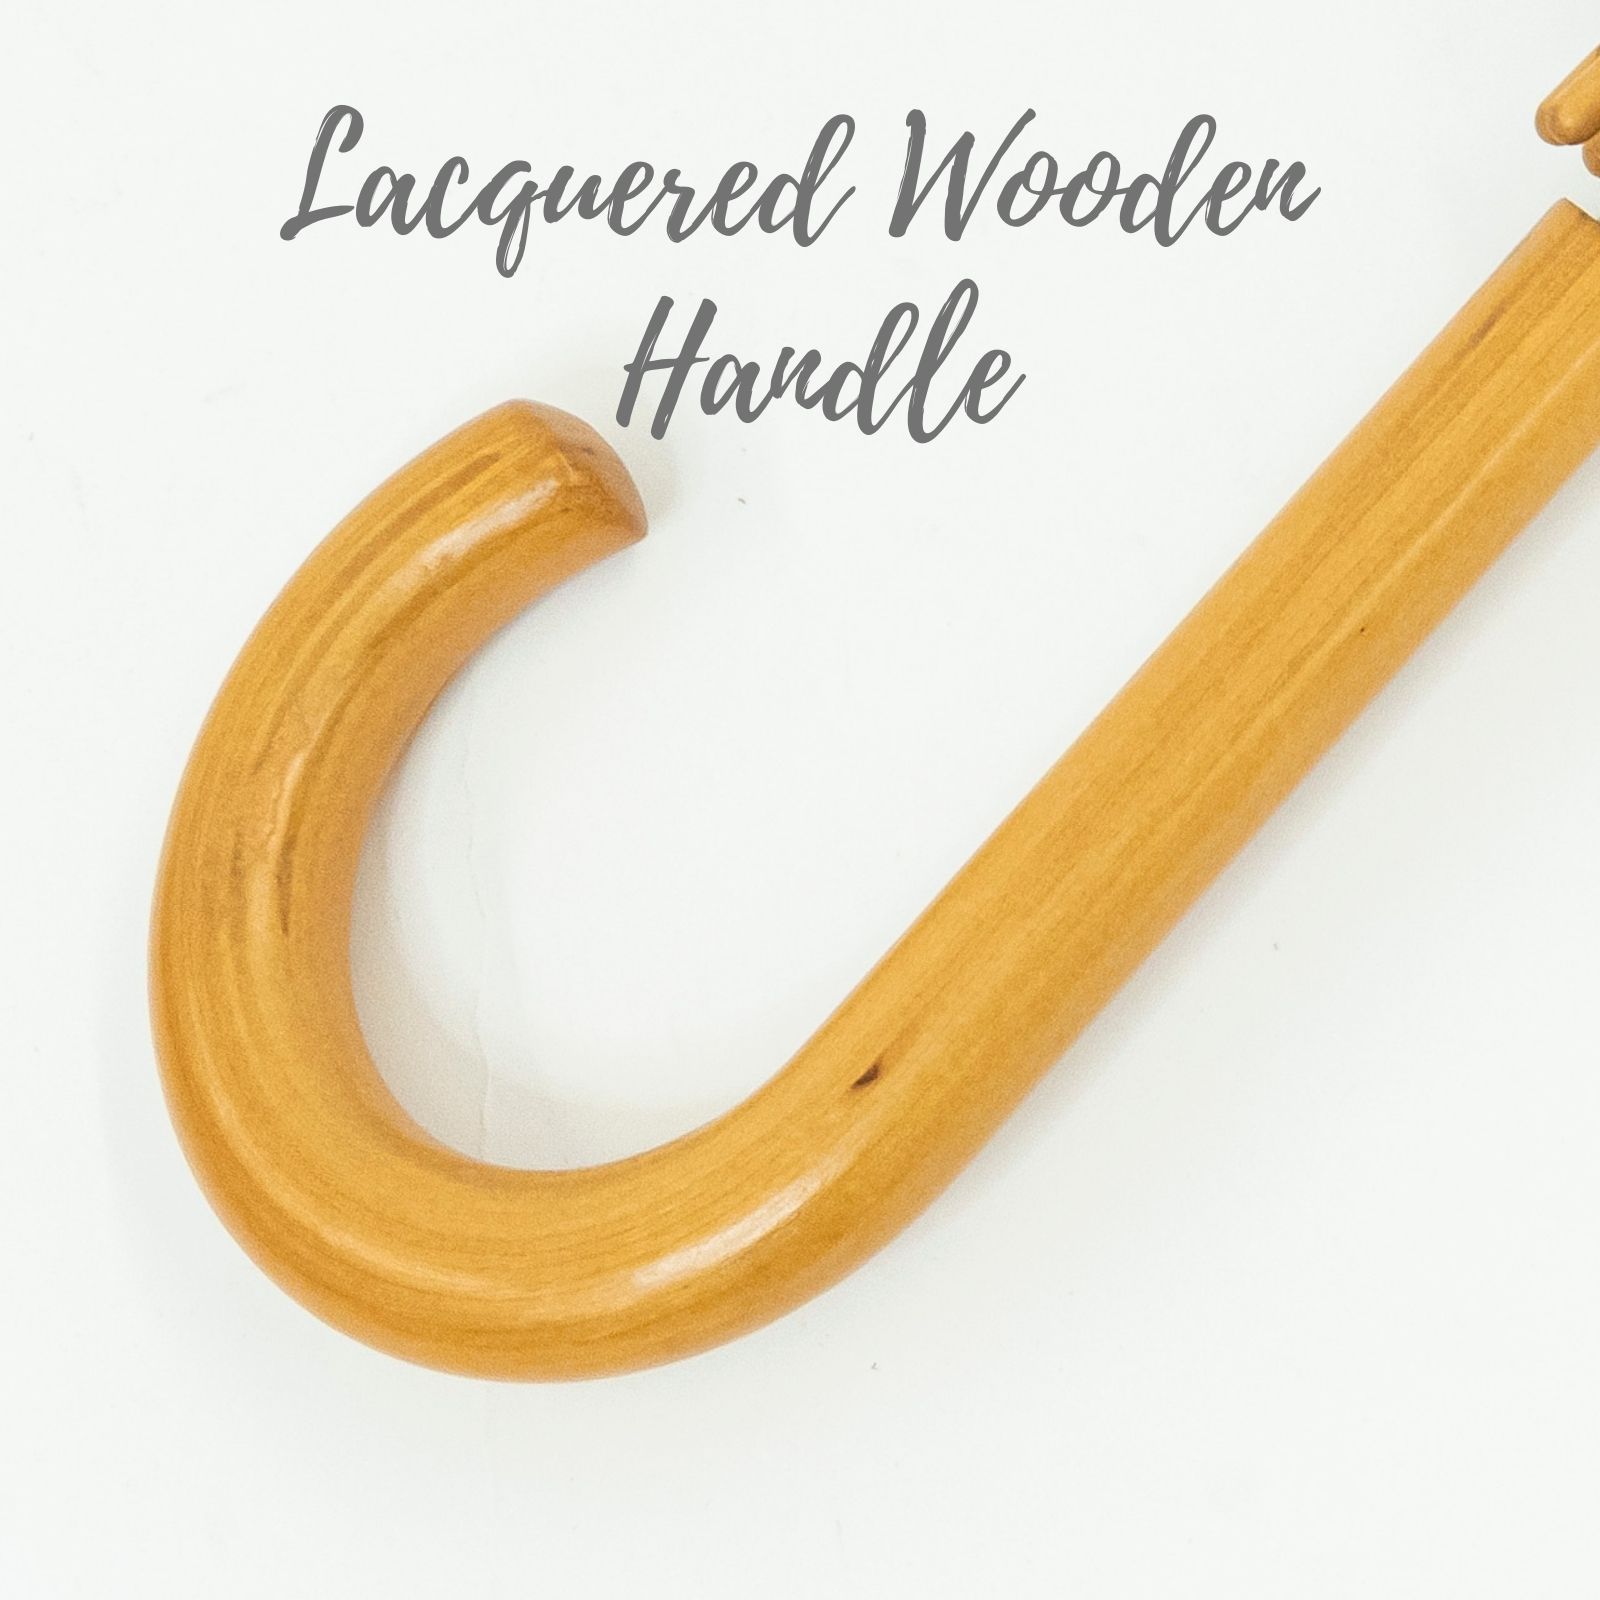 Maroon Wood Stick Umbrella infographic of wooden handle